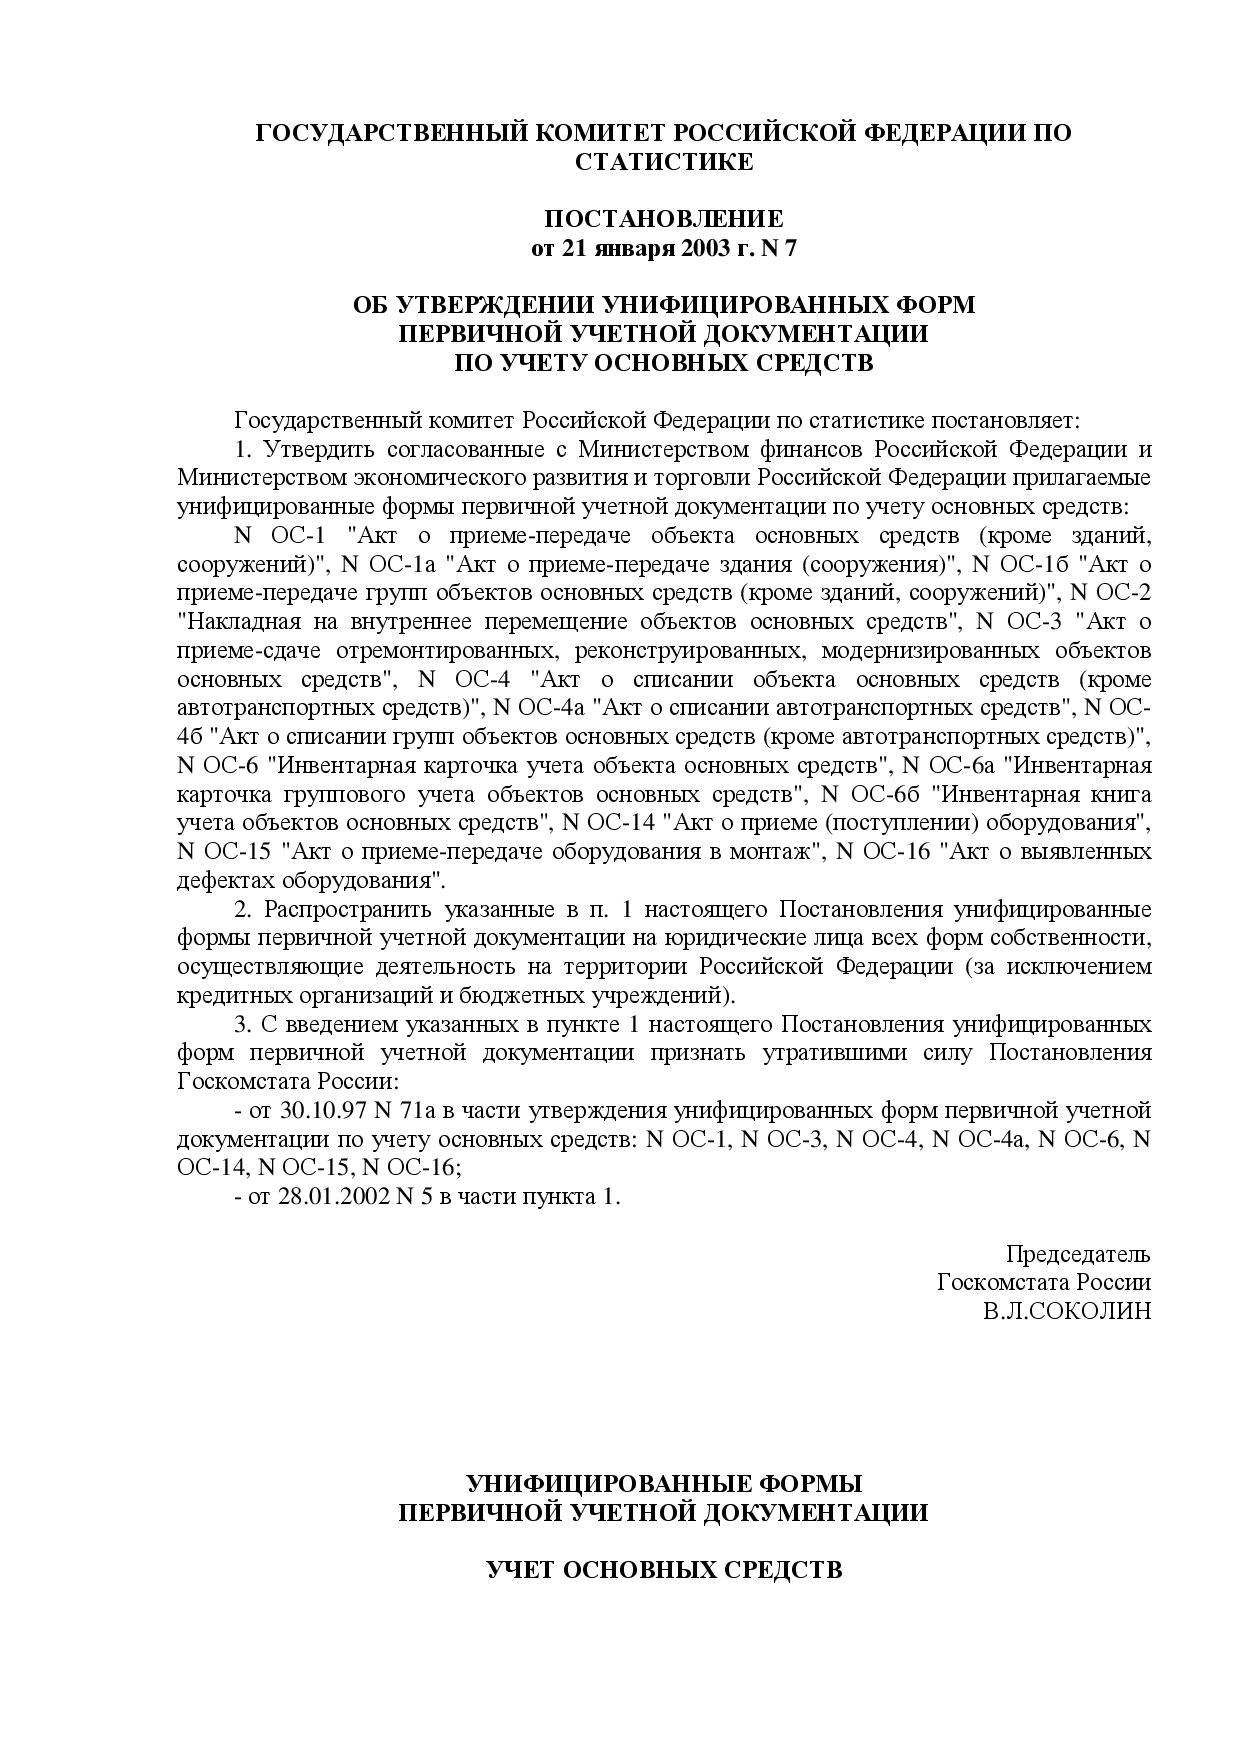 Документы при оформлении реализации услуг спецтехники ООО на ОСНО